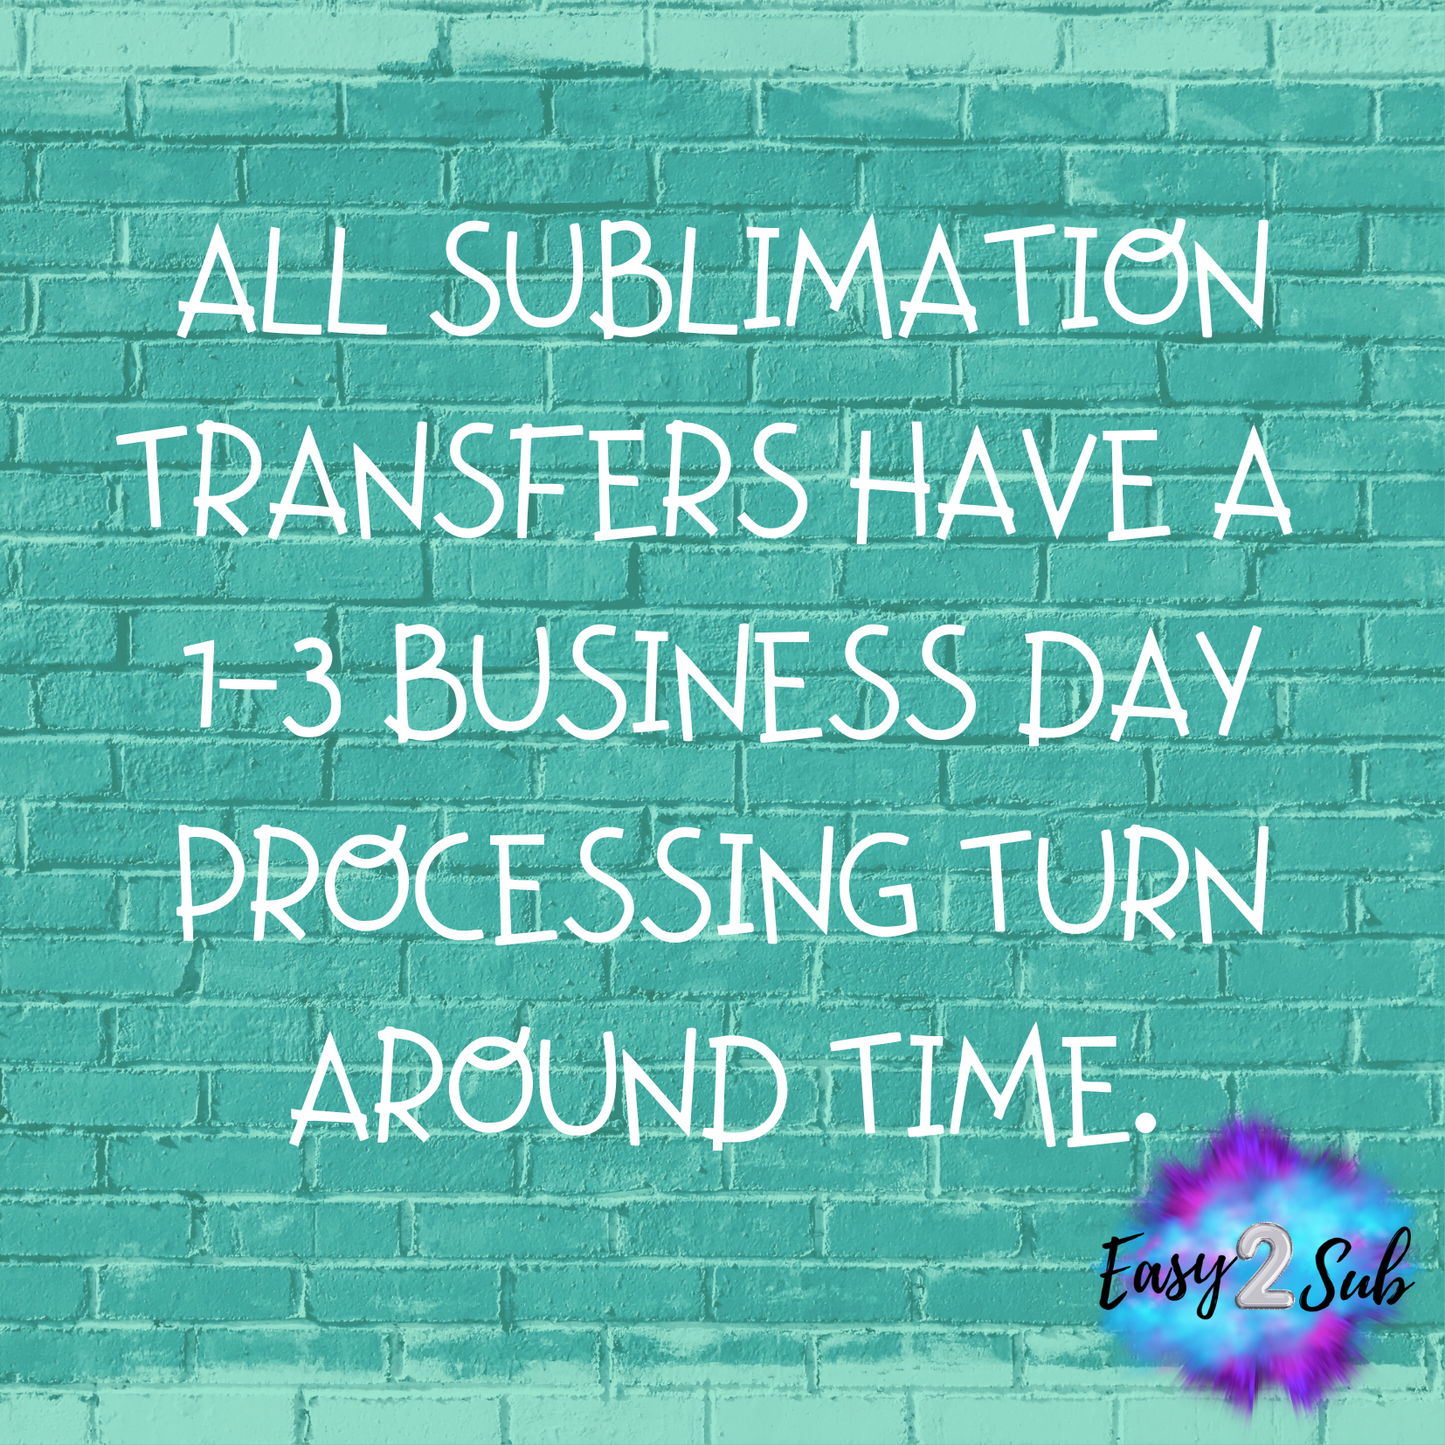 Feel Your Feelings Sublimation Transfer Print, Ready To Press Sublimation Transfer, Image transfer, T-Shirt Transfer Sheet